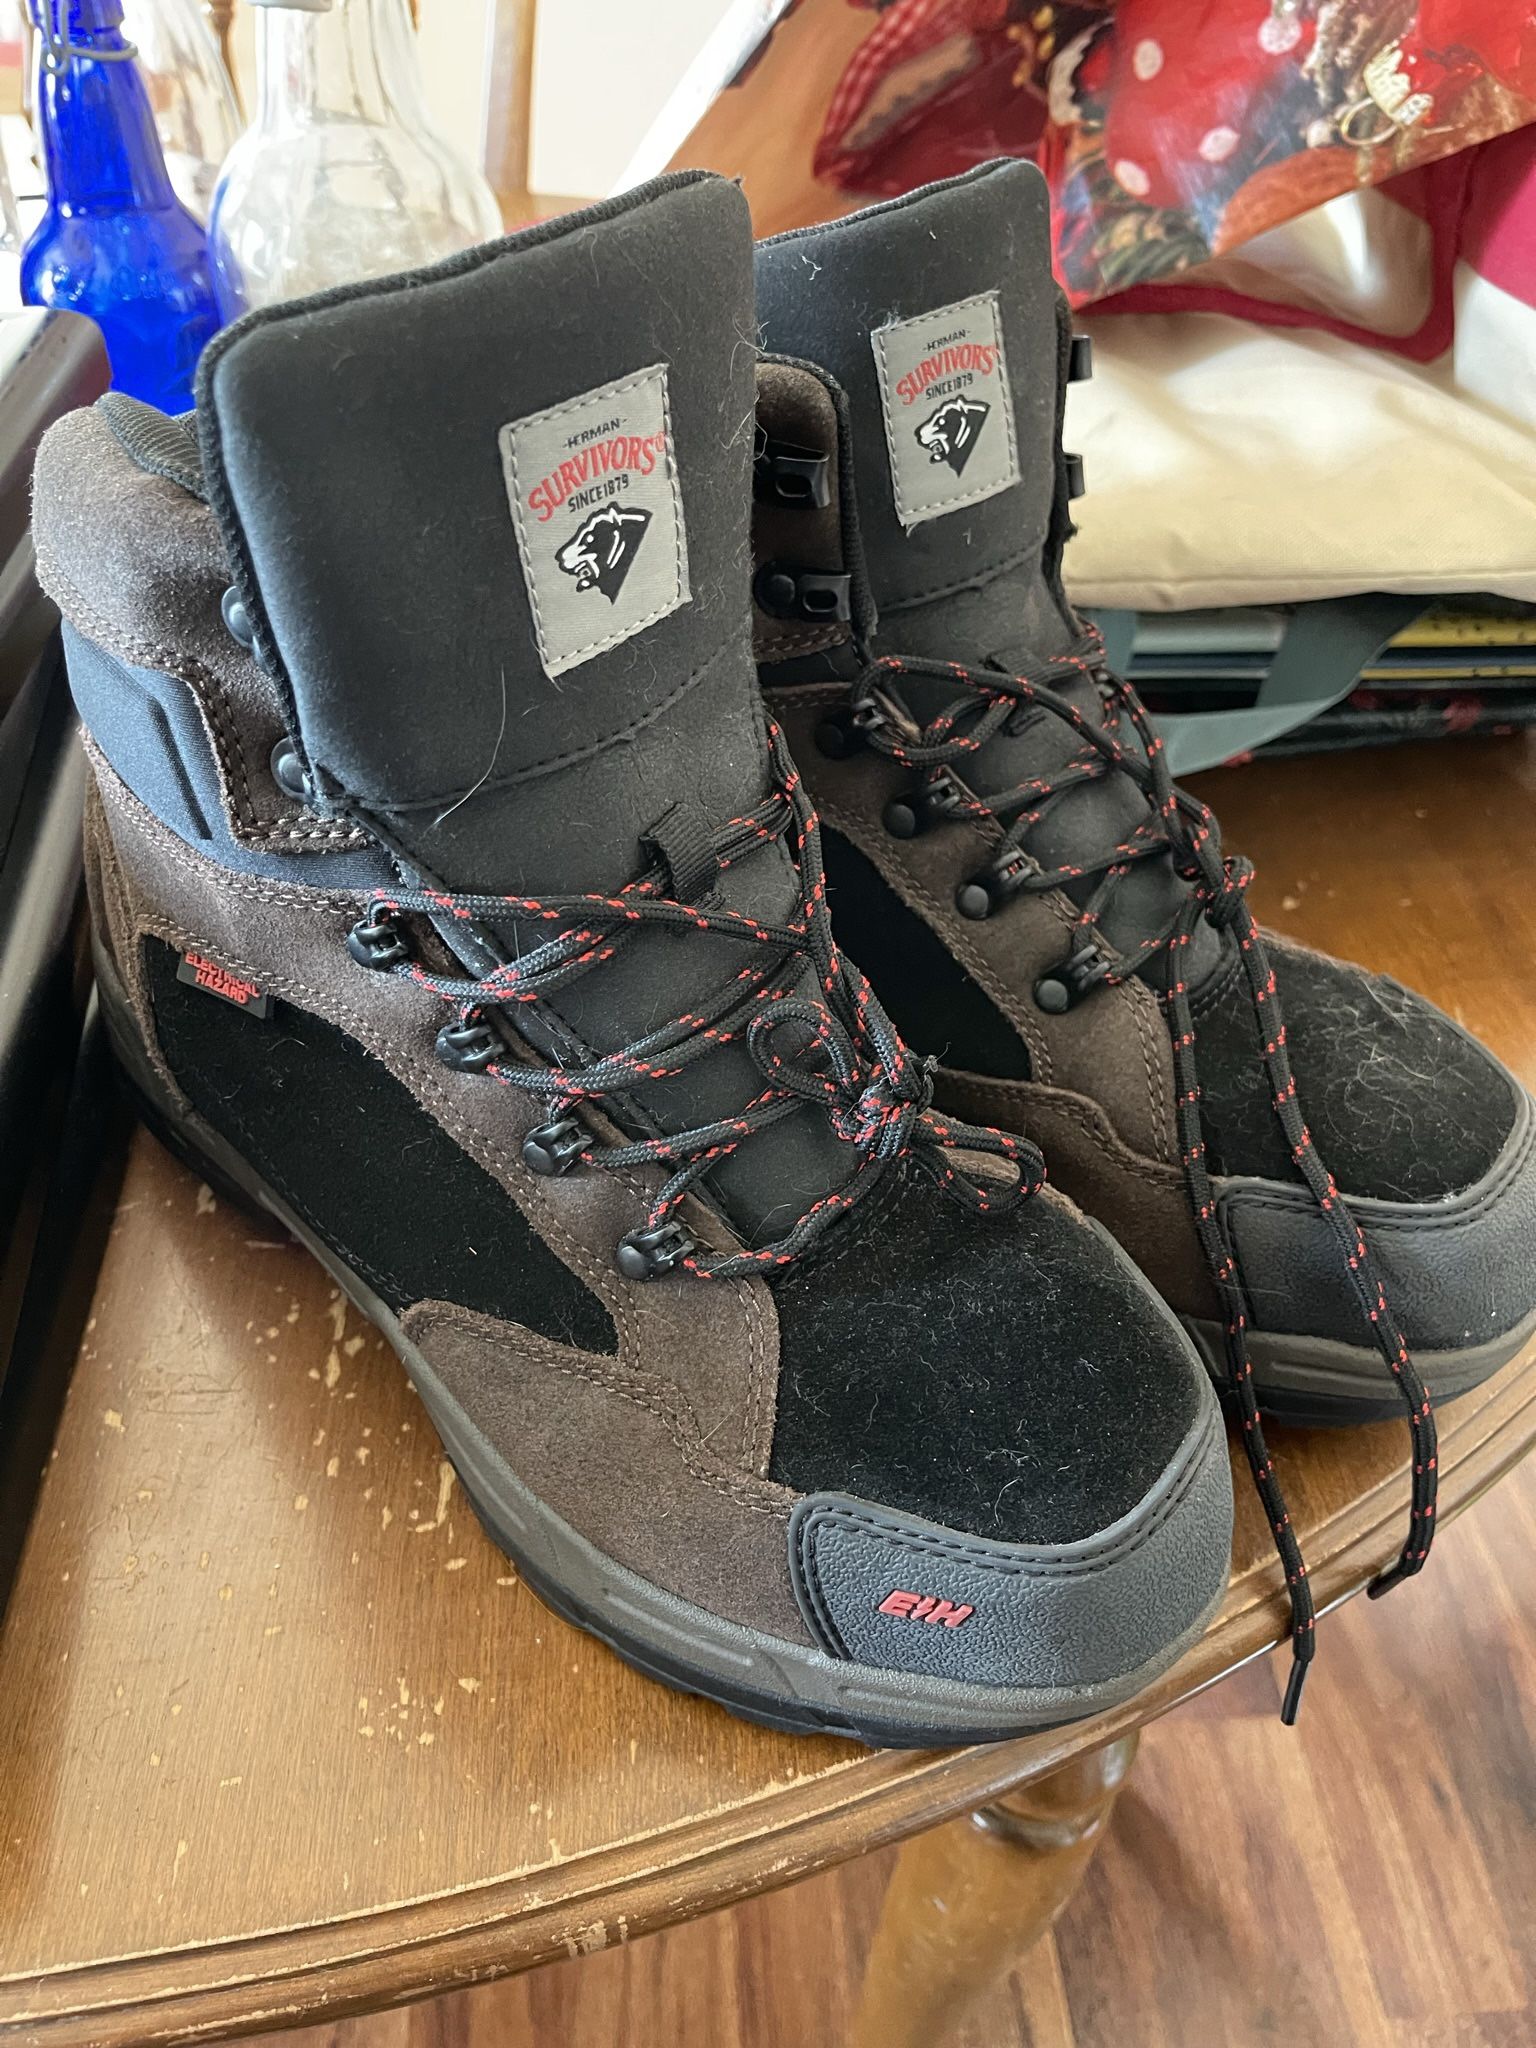 Steel Toe Work Boots Size 9.5